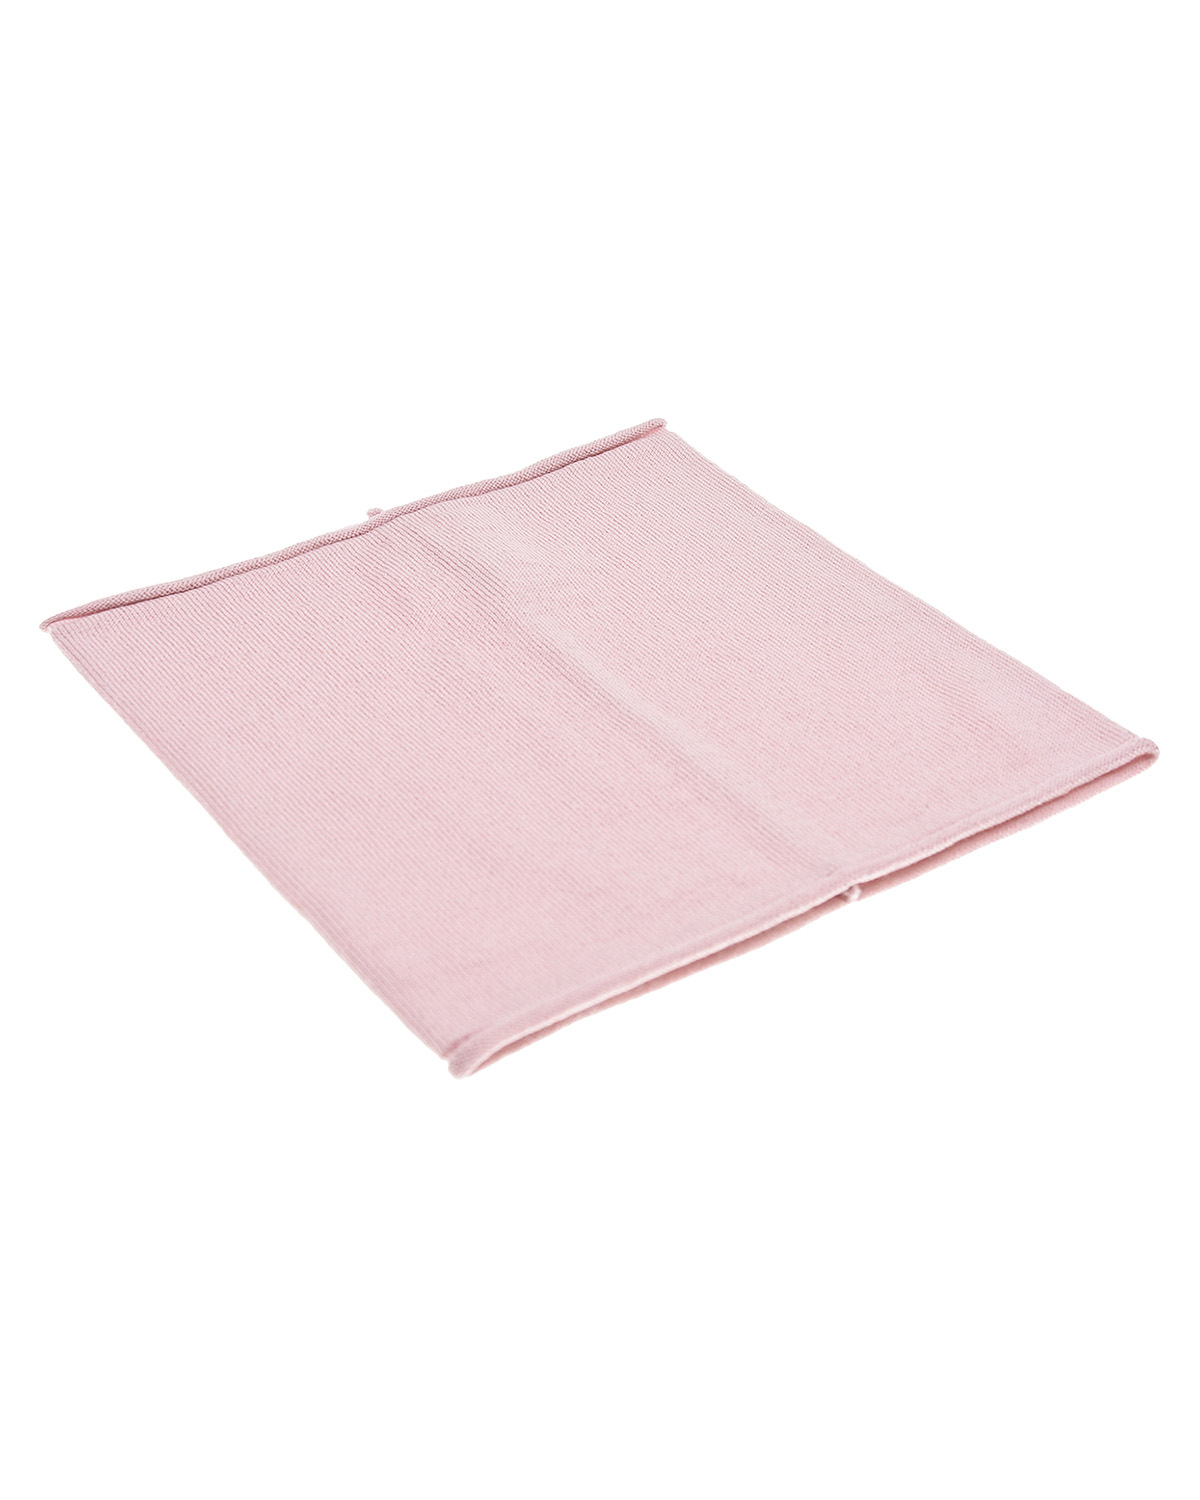 Розовый шарф-ворот, 26x24 см Catya детский, размер unica - фото 1